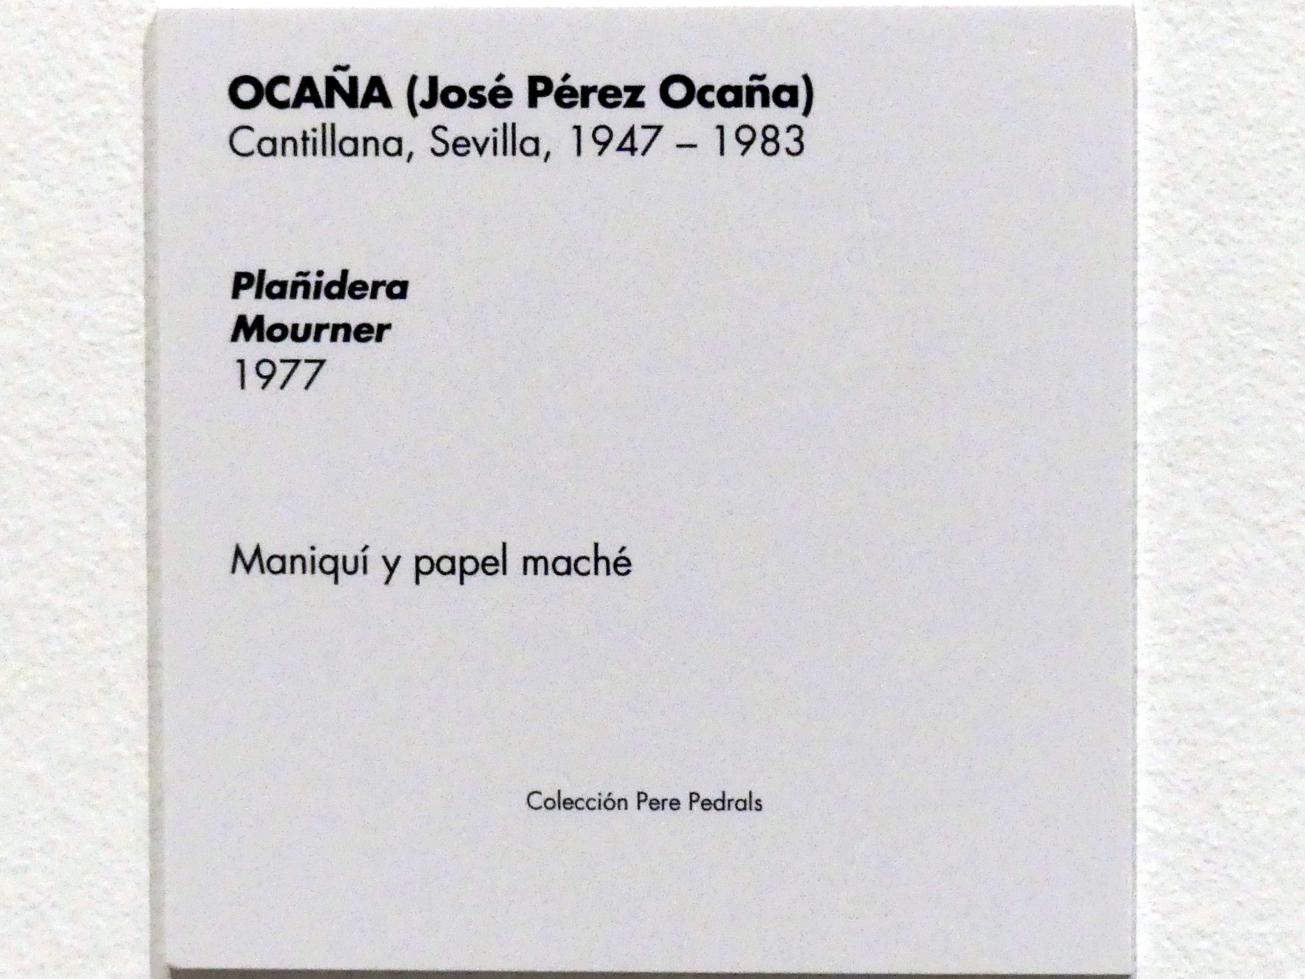 Ocaña (José Pérez Ocaña) (1977), Trauernde, Madrid, Museo Reina Sofía, Saal 001.08, 1977, Bild 5/5